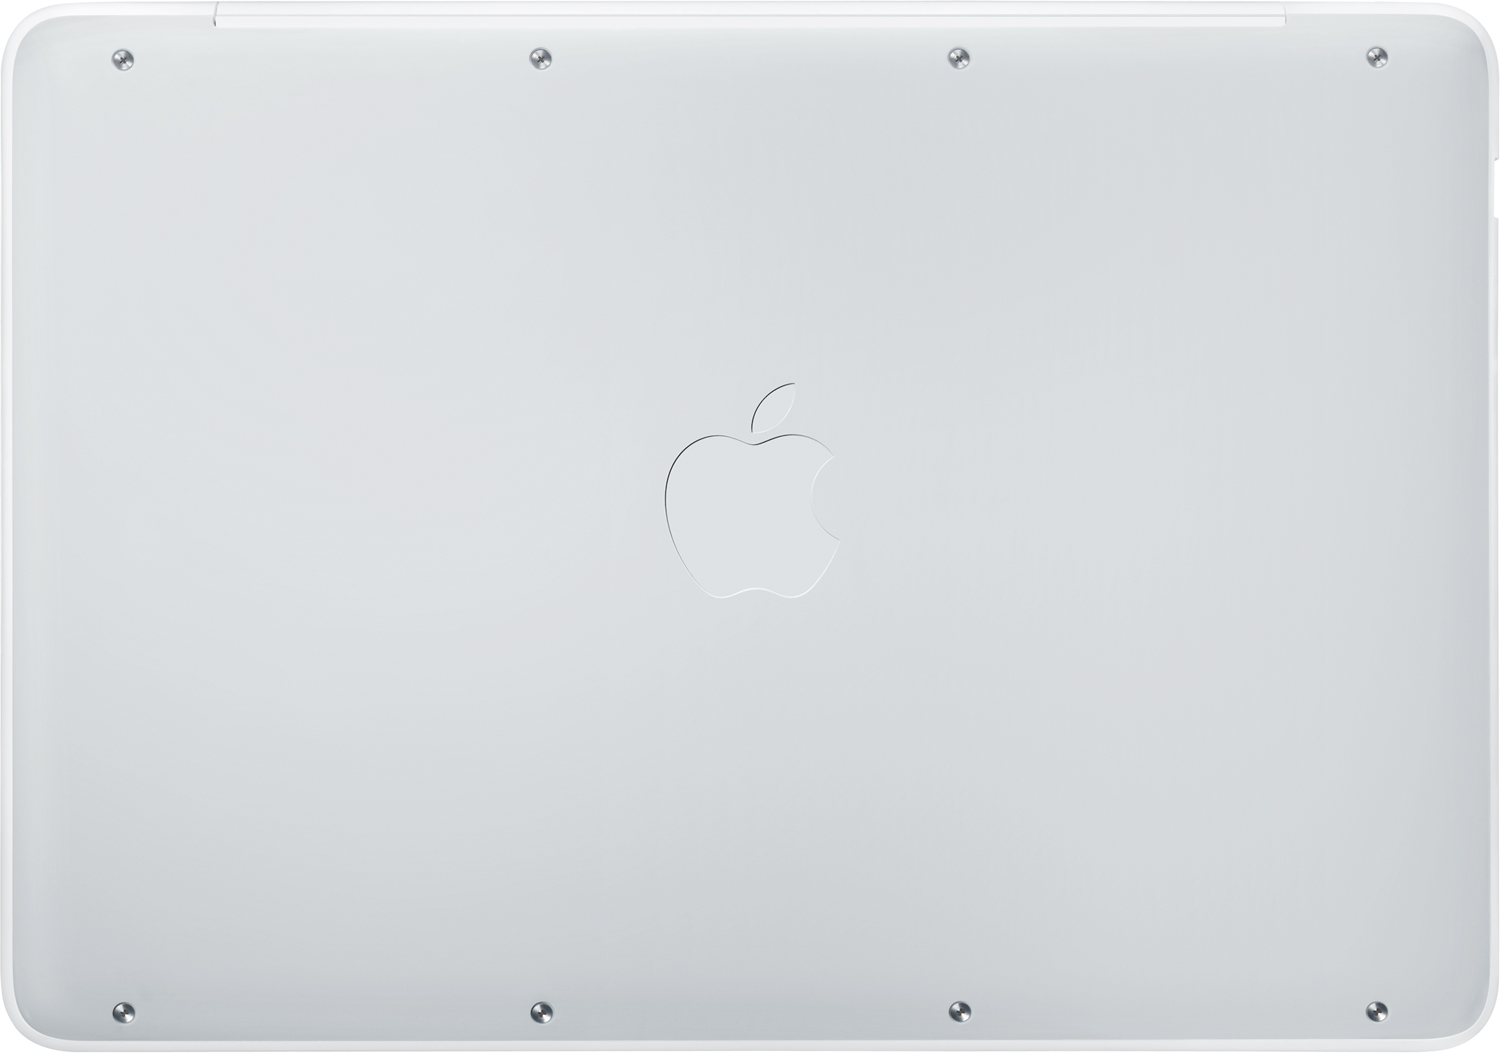 MacBook branco